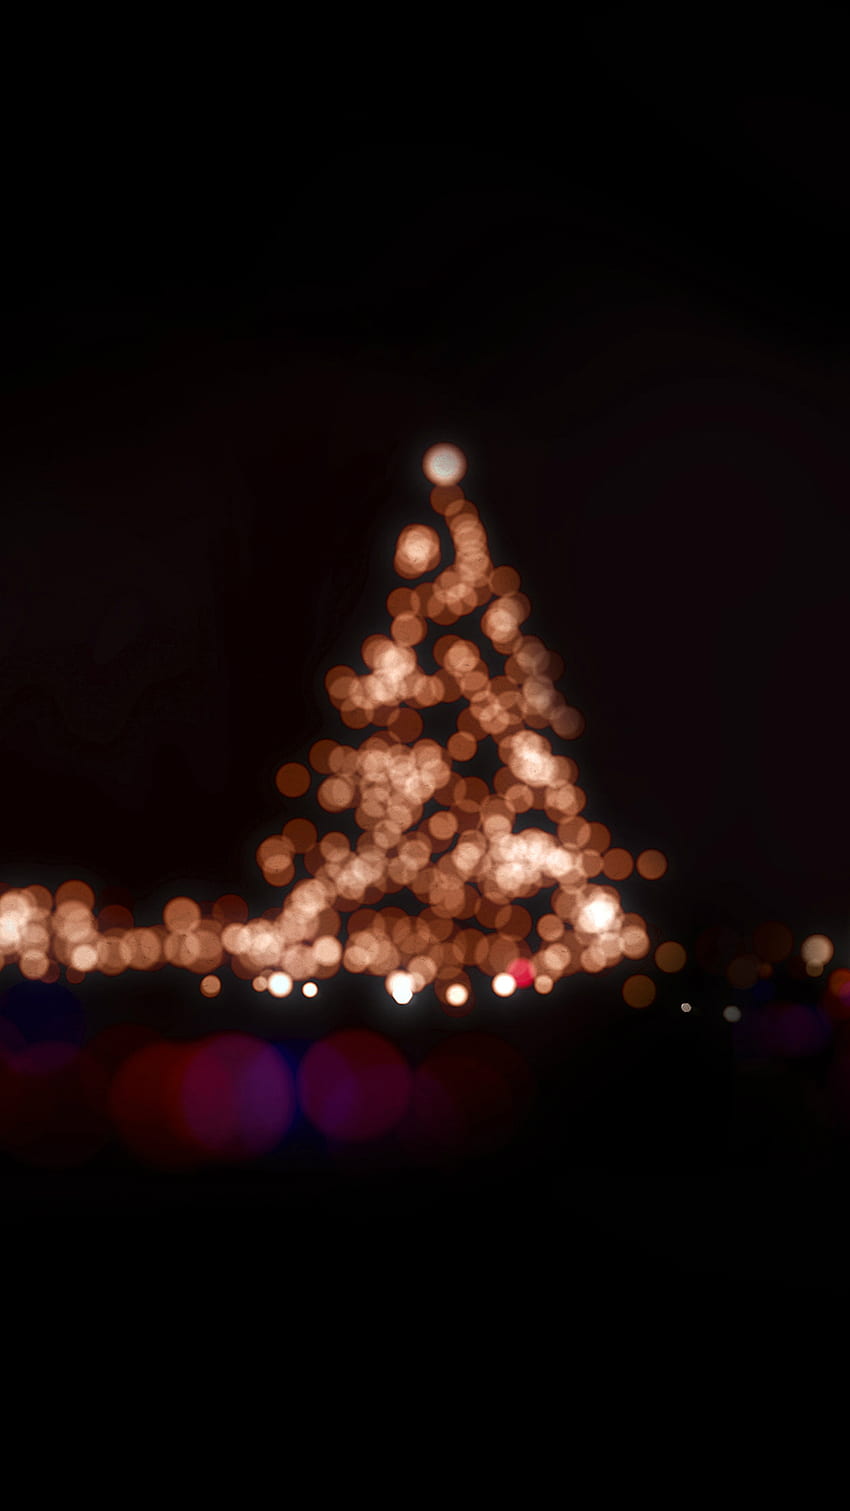 A blurry Christmas tree is lit up at night. - Christmas, Christmas lights